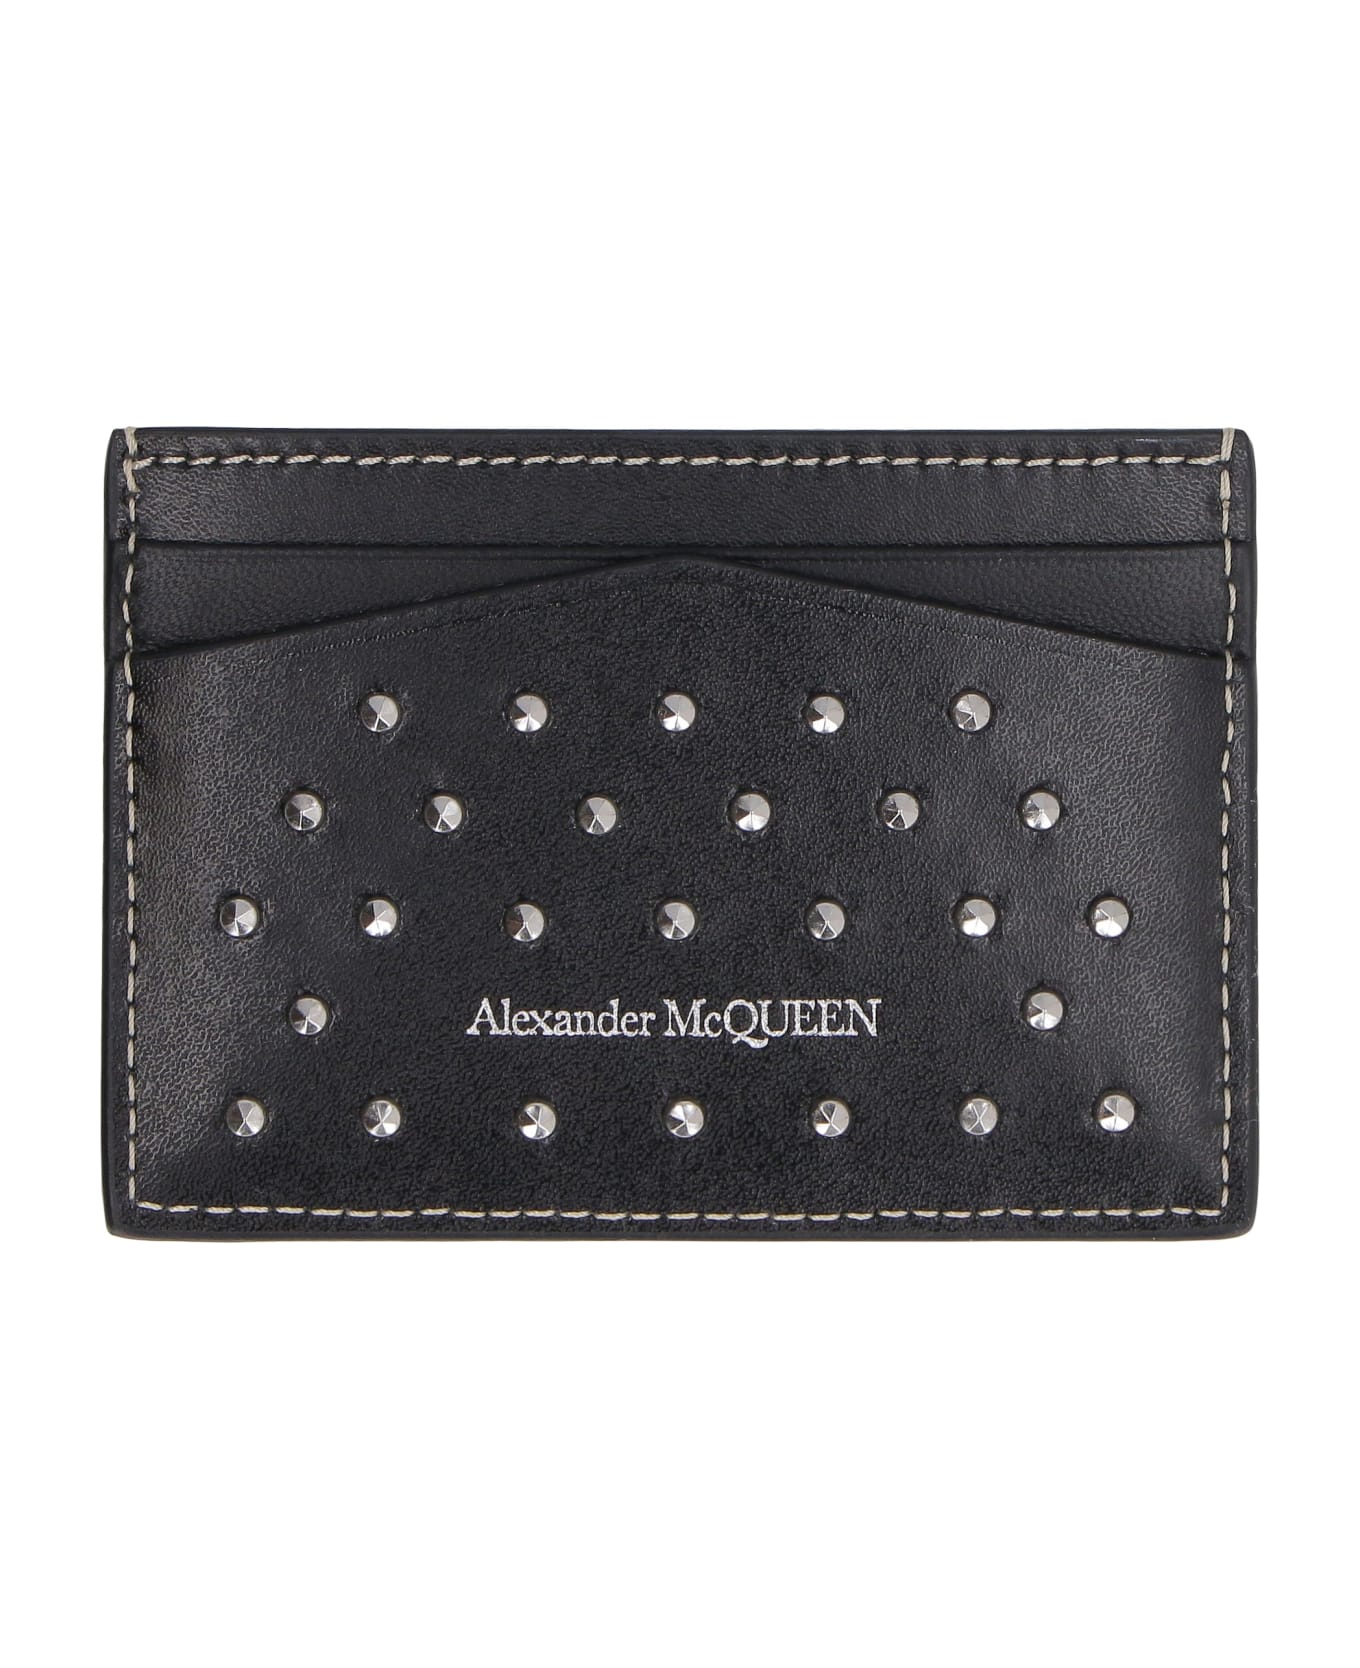 Alexander McQueen Skull Studded Leather Wallet - black